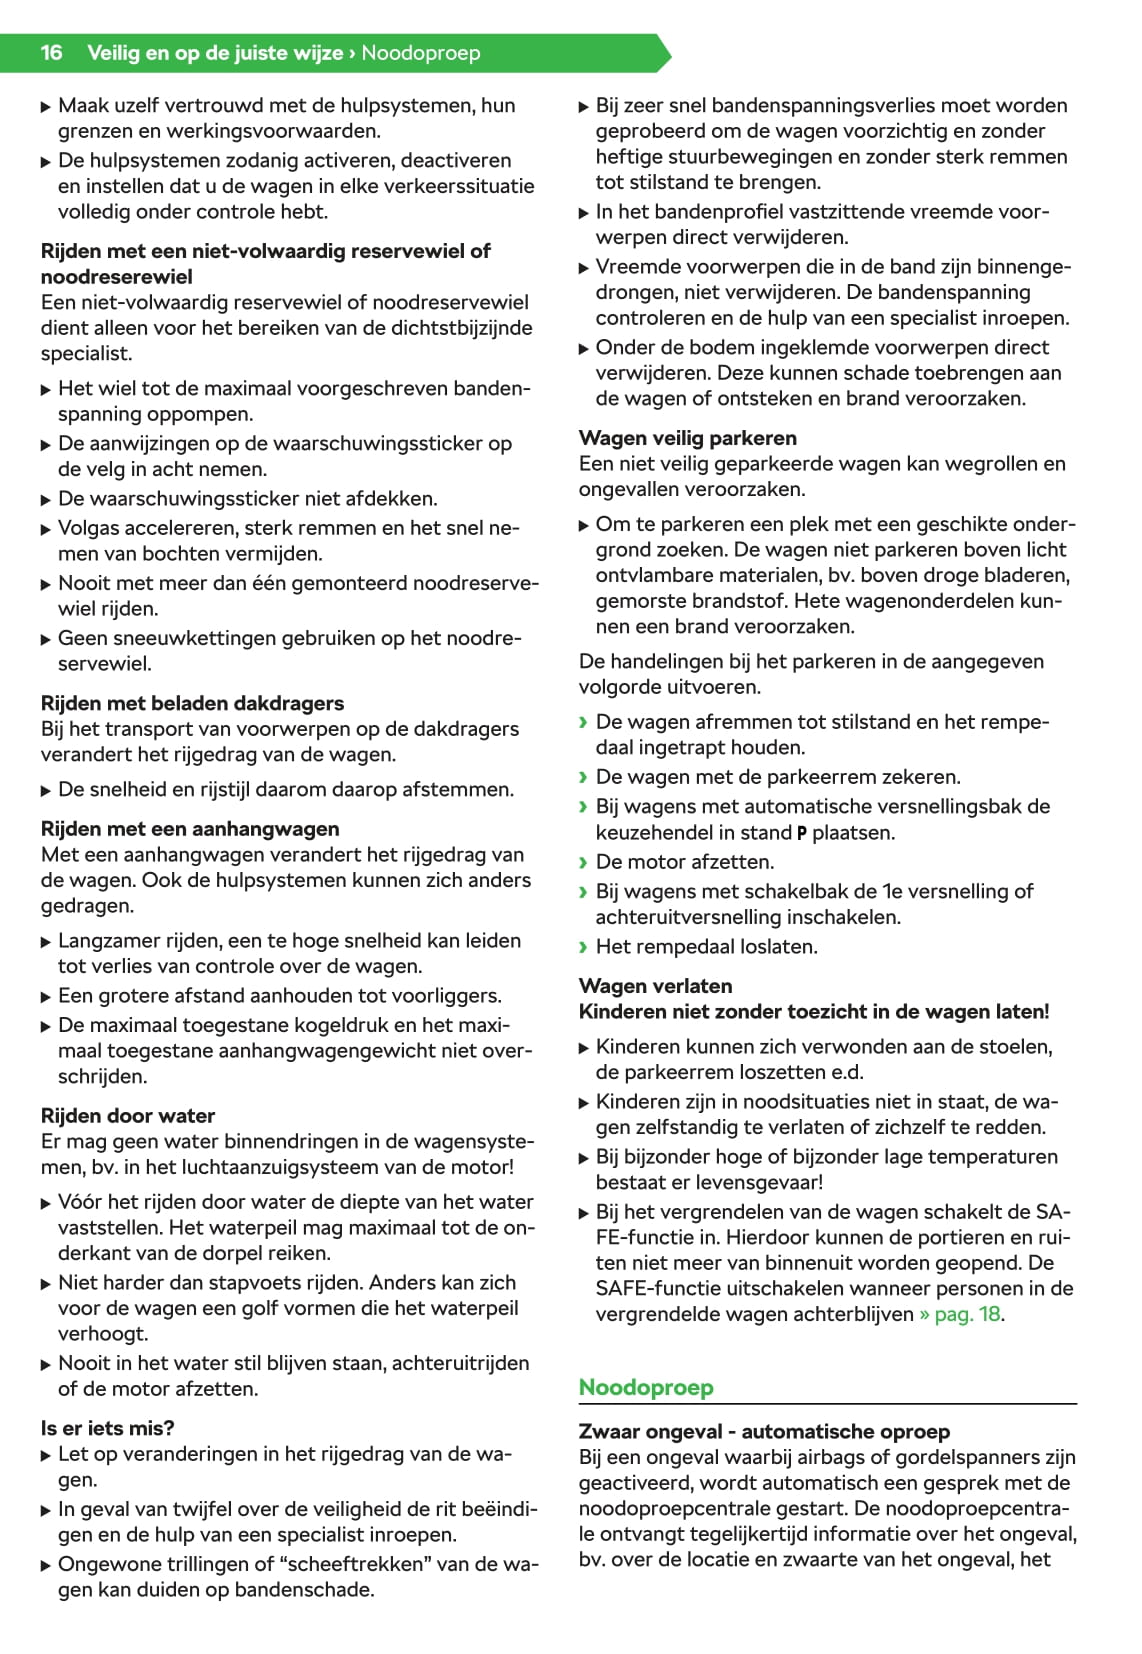 2019-2020 Skoda Scala Owner's Manual | Dutch